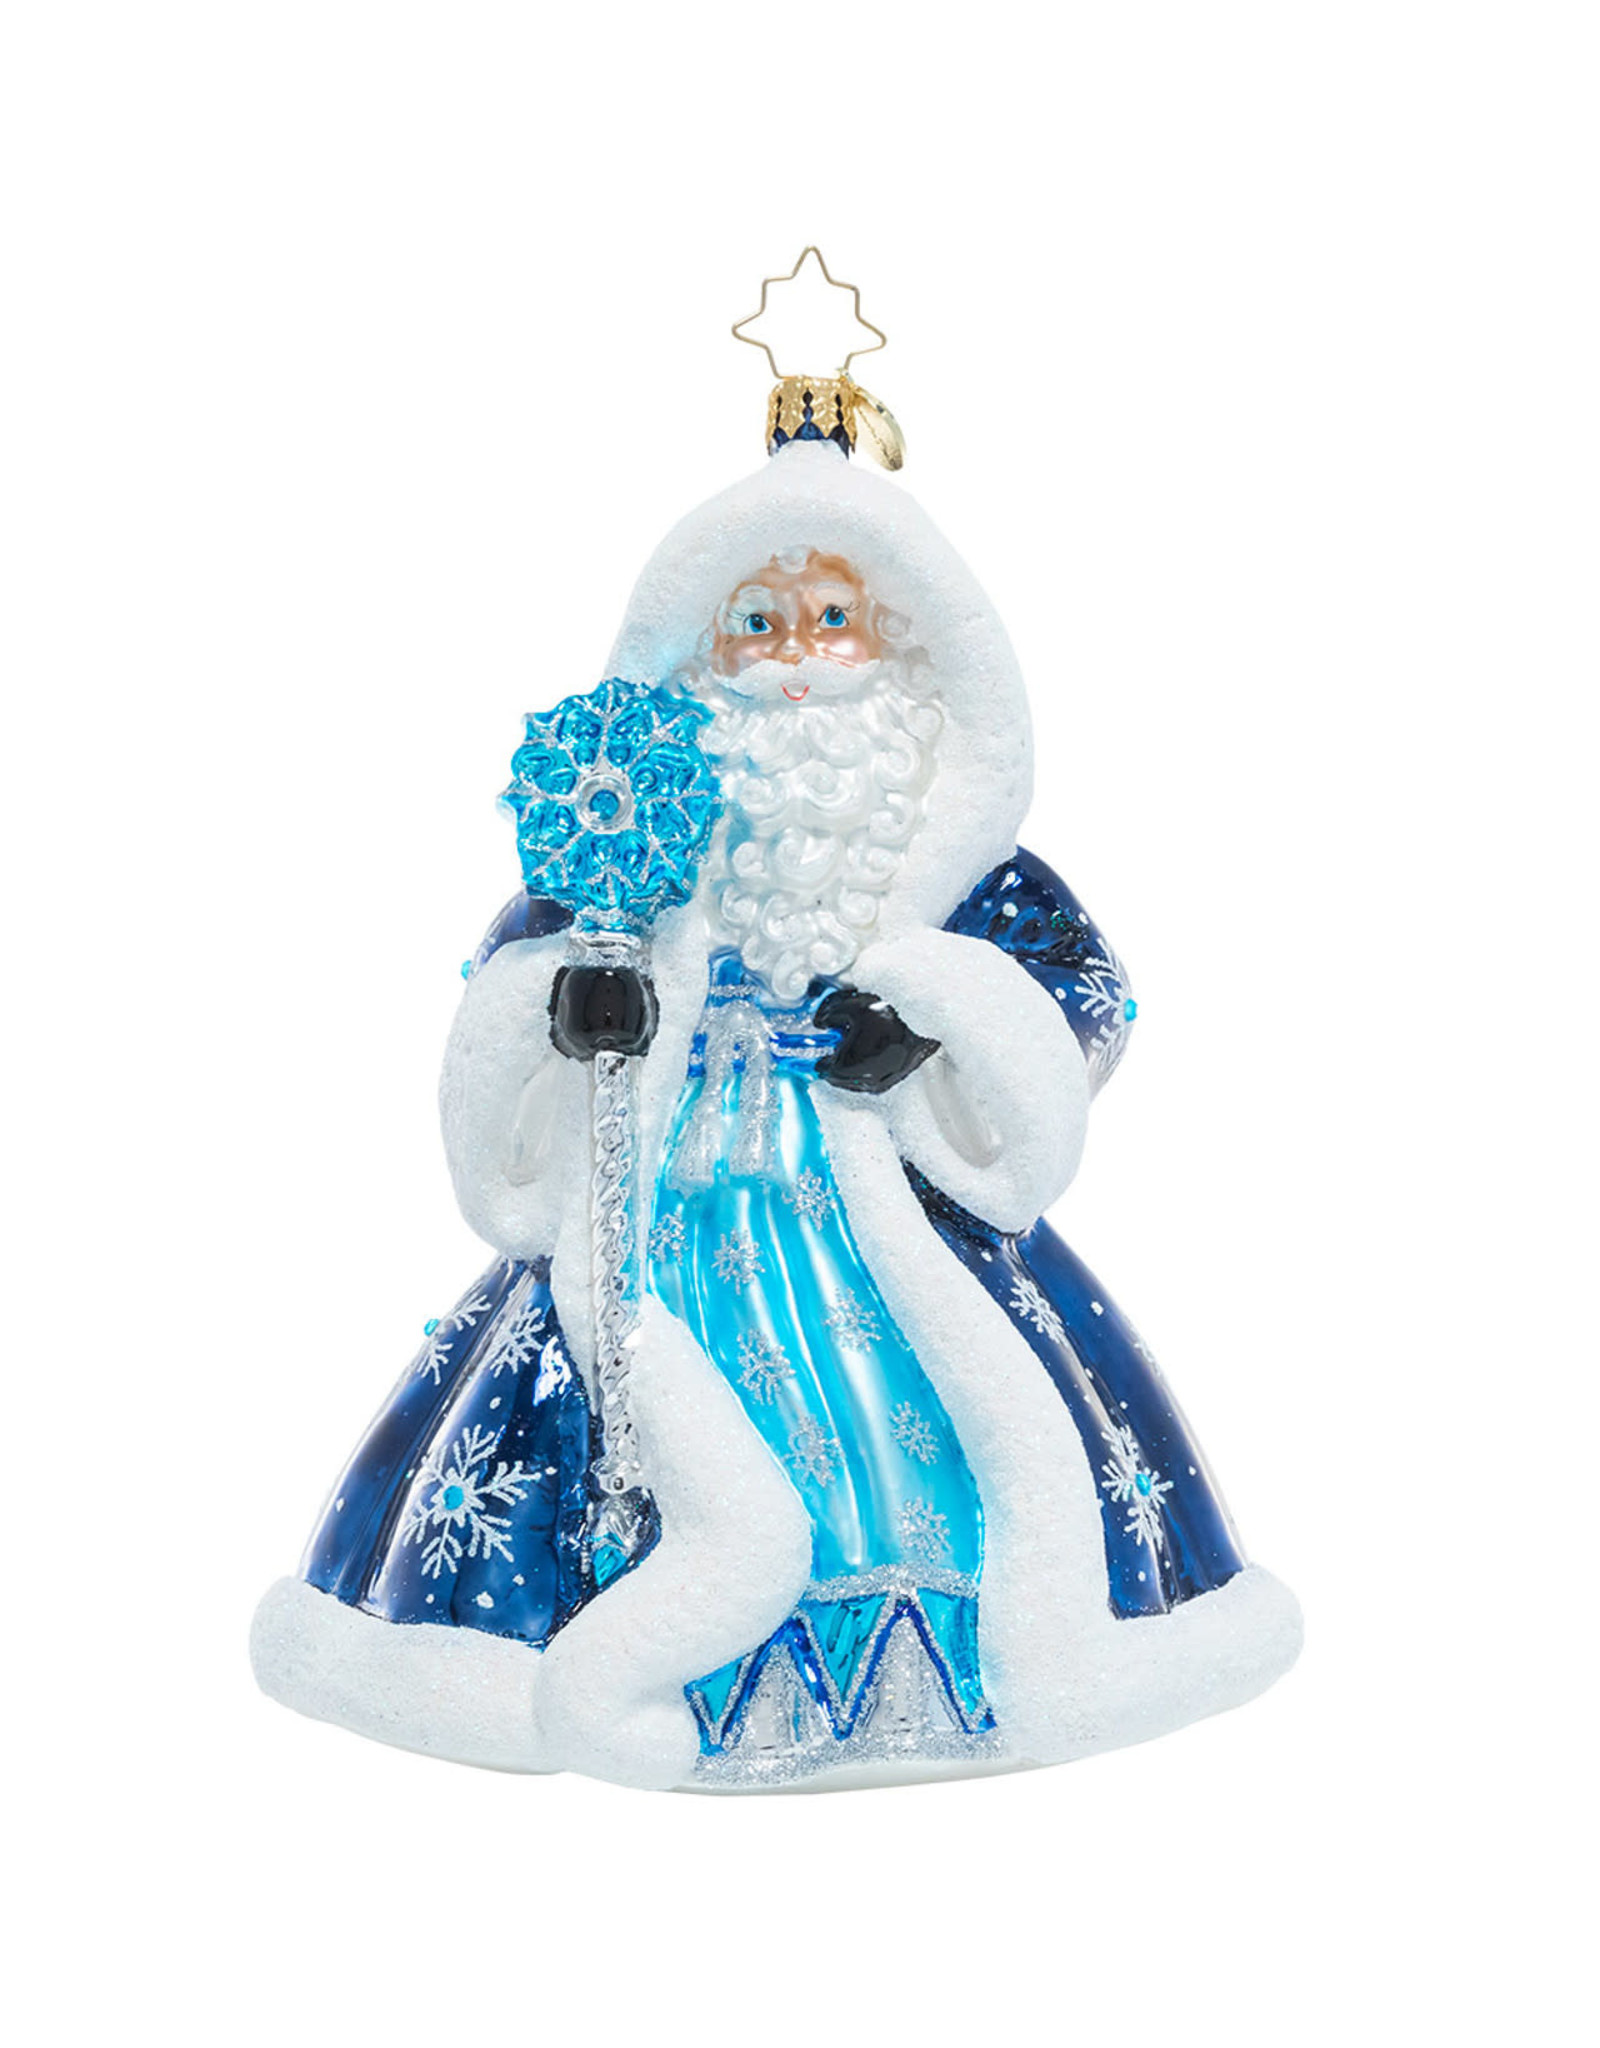 Christopher Radko Winter Dream Santa Christmas Ornament